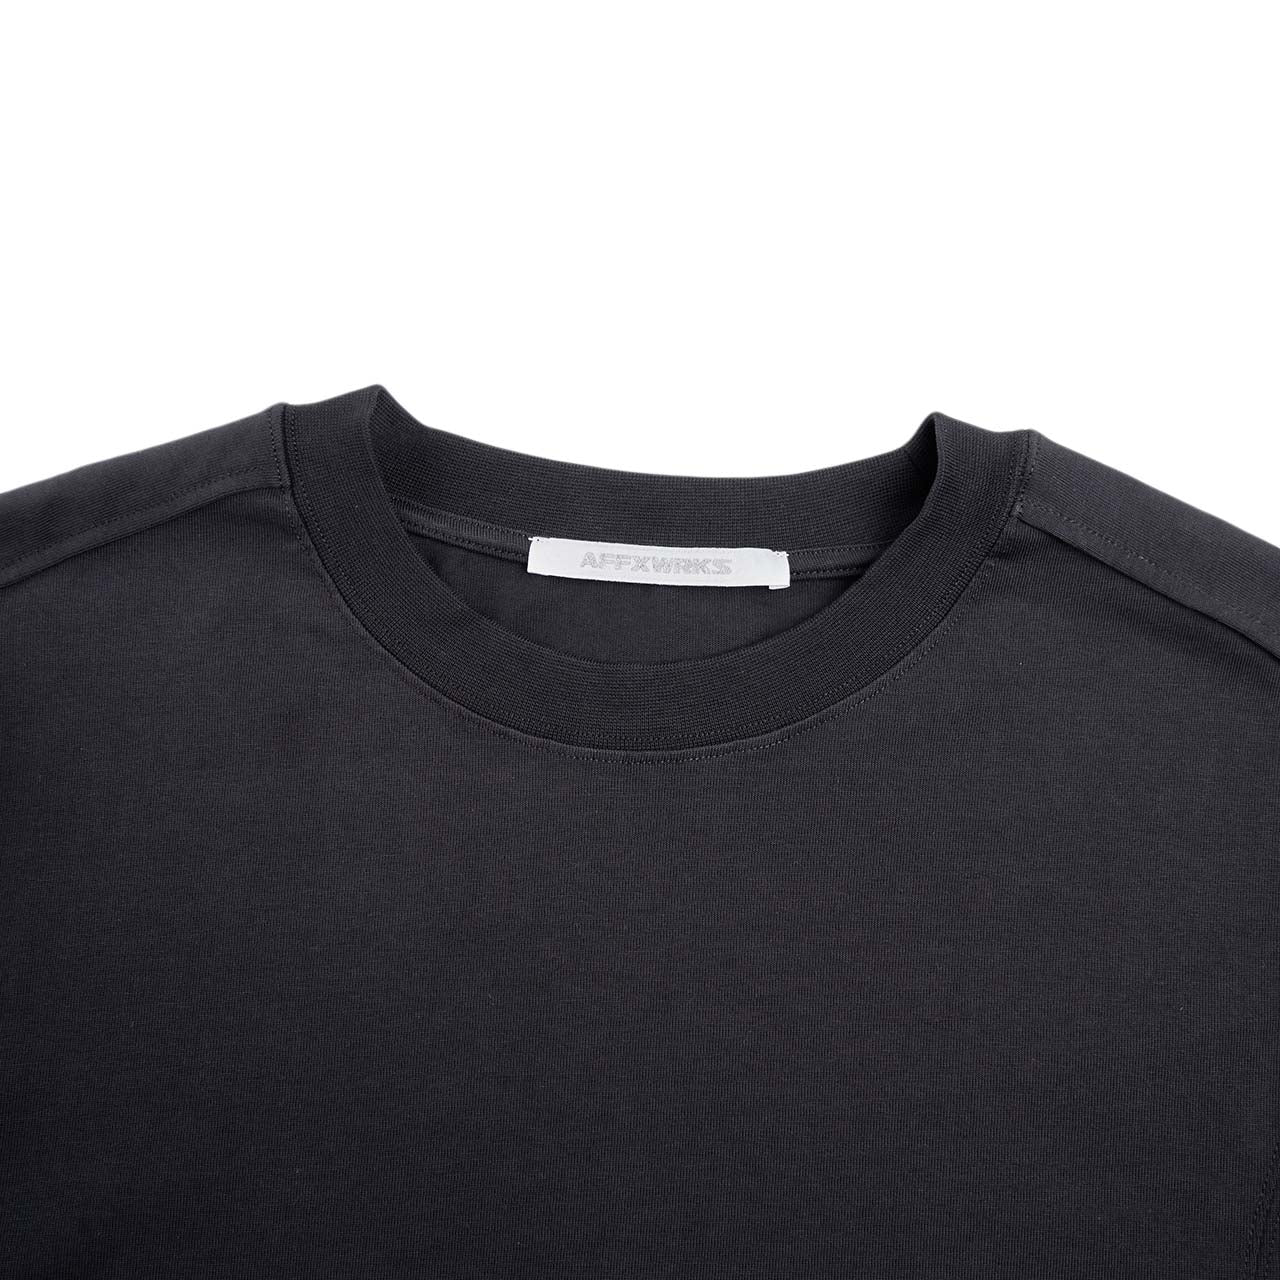 affxwrks dual sleeve t-shirt (deep black)